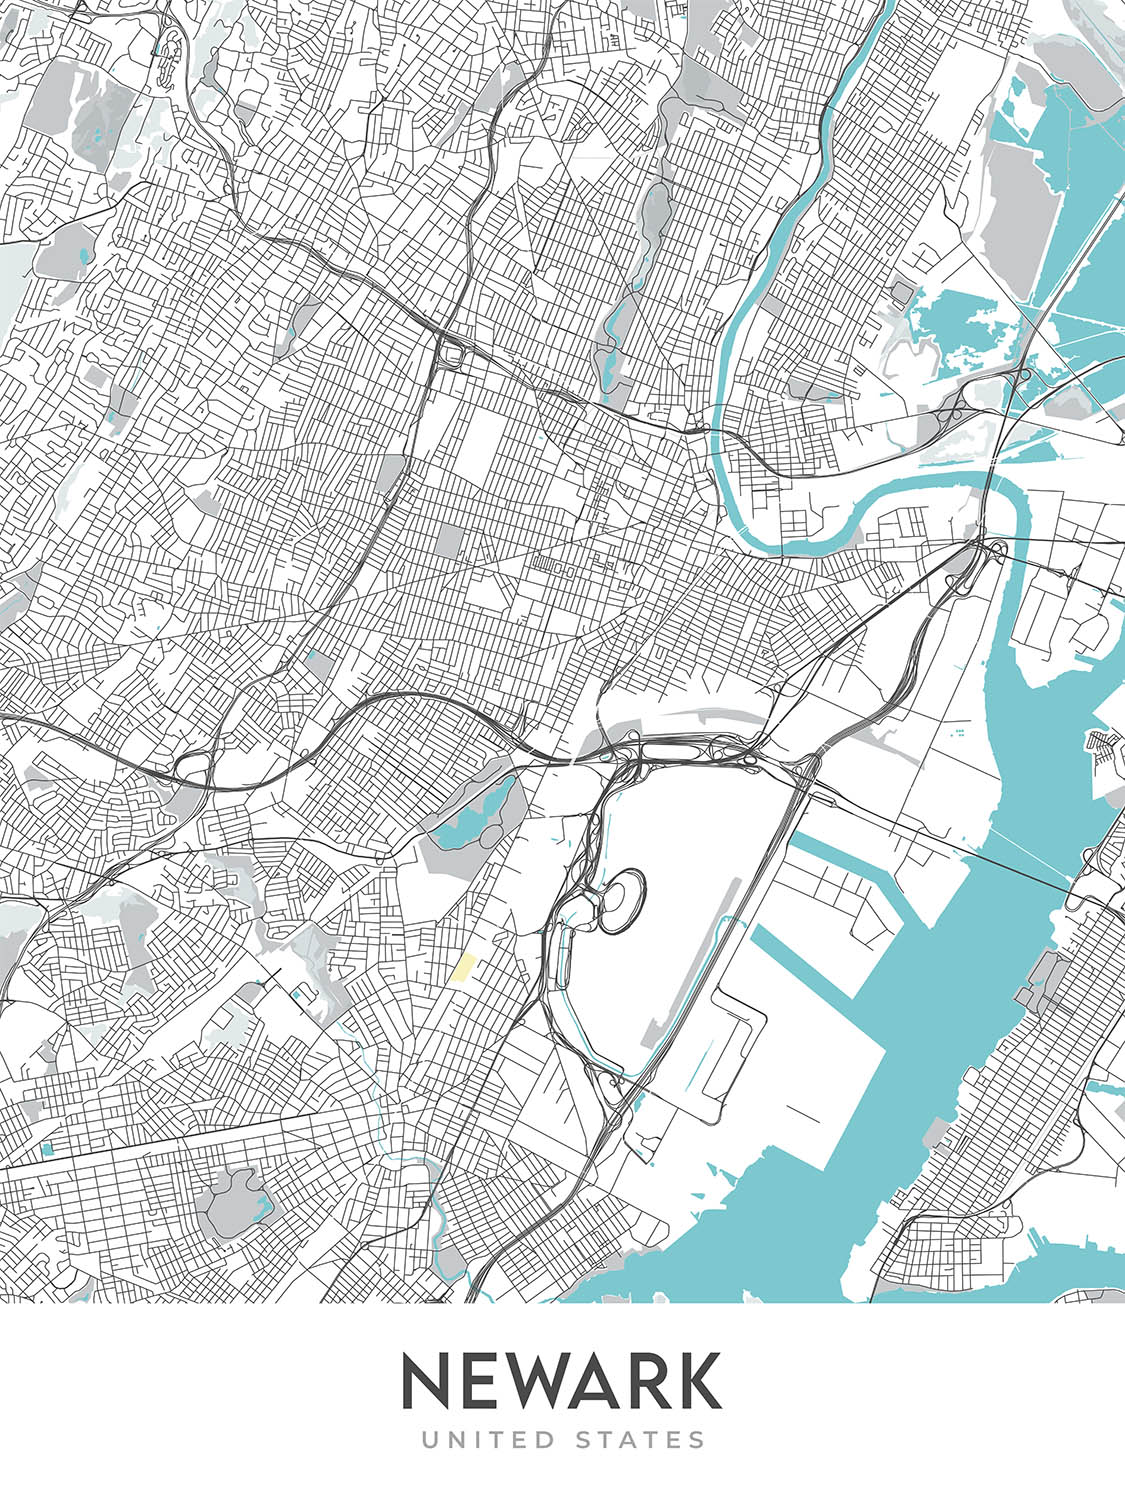 Plan de la ville moderne de Newark, NJ : centre-ville, Ironbound, Prudential Center, Rutgers, NJ Turnpike